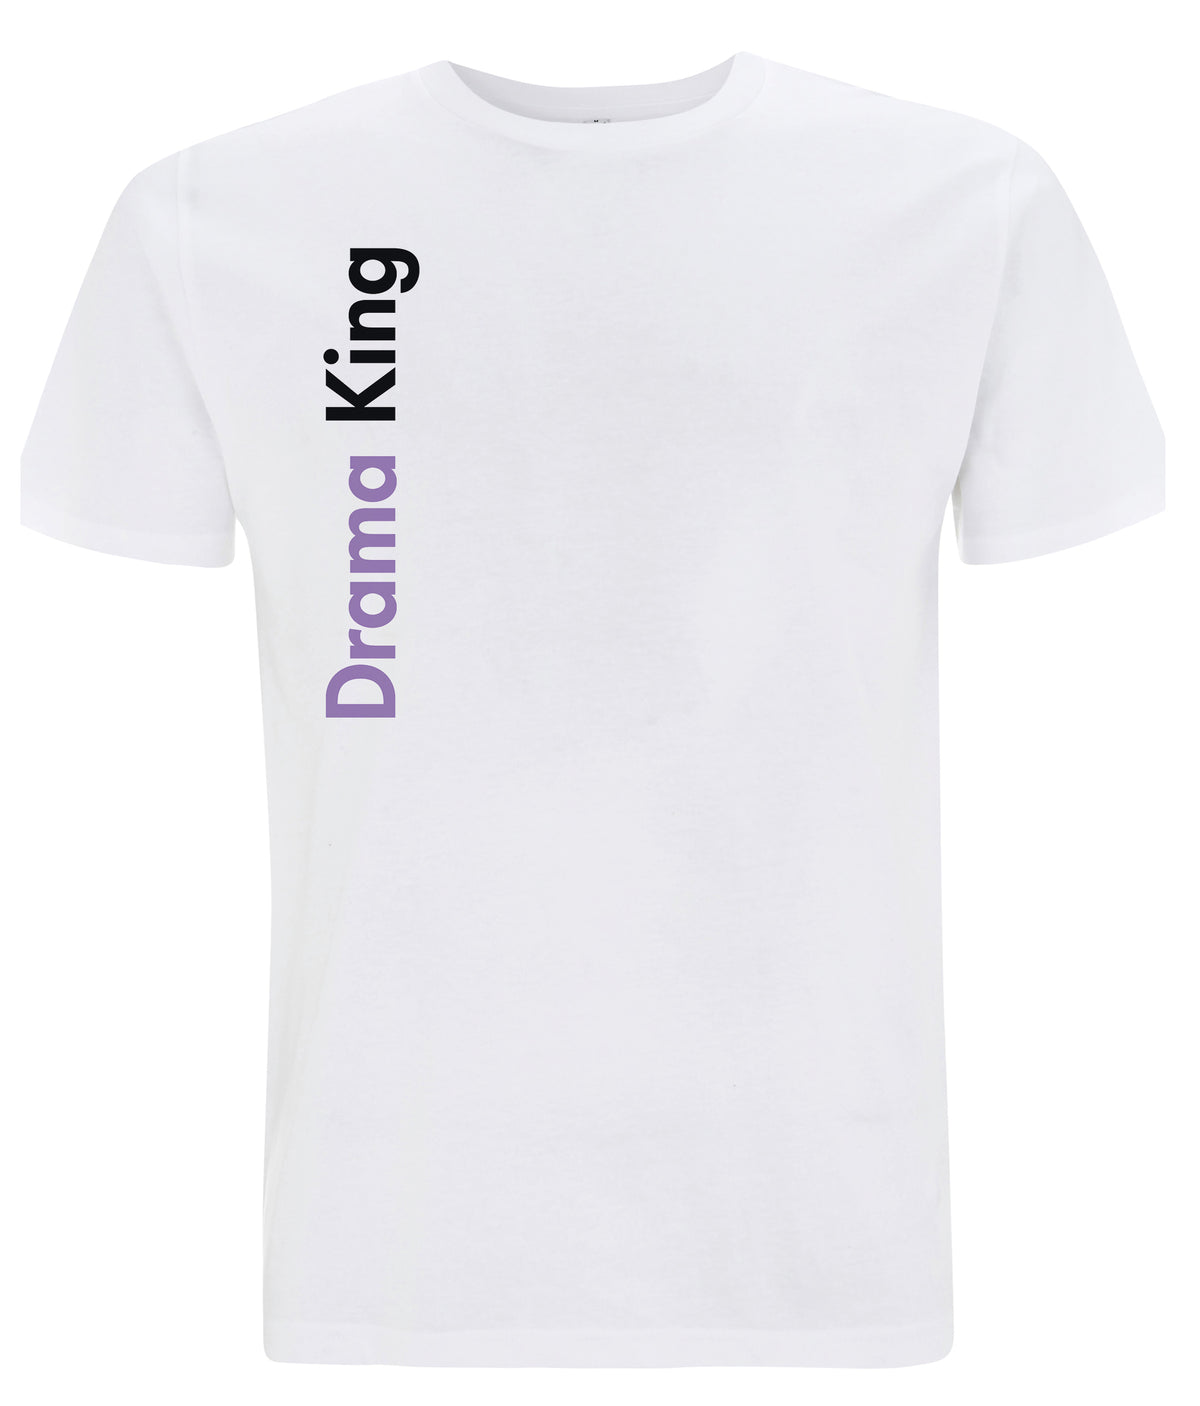 Drama King Organic Feminist T Shirt White